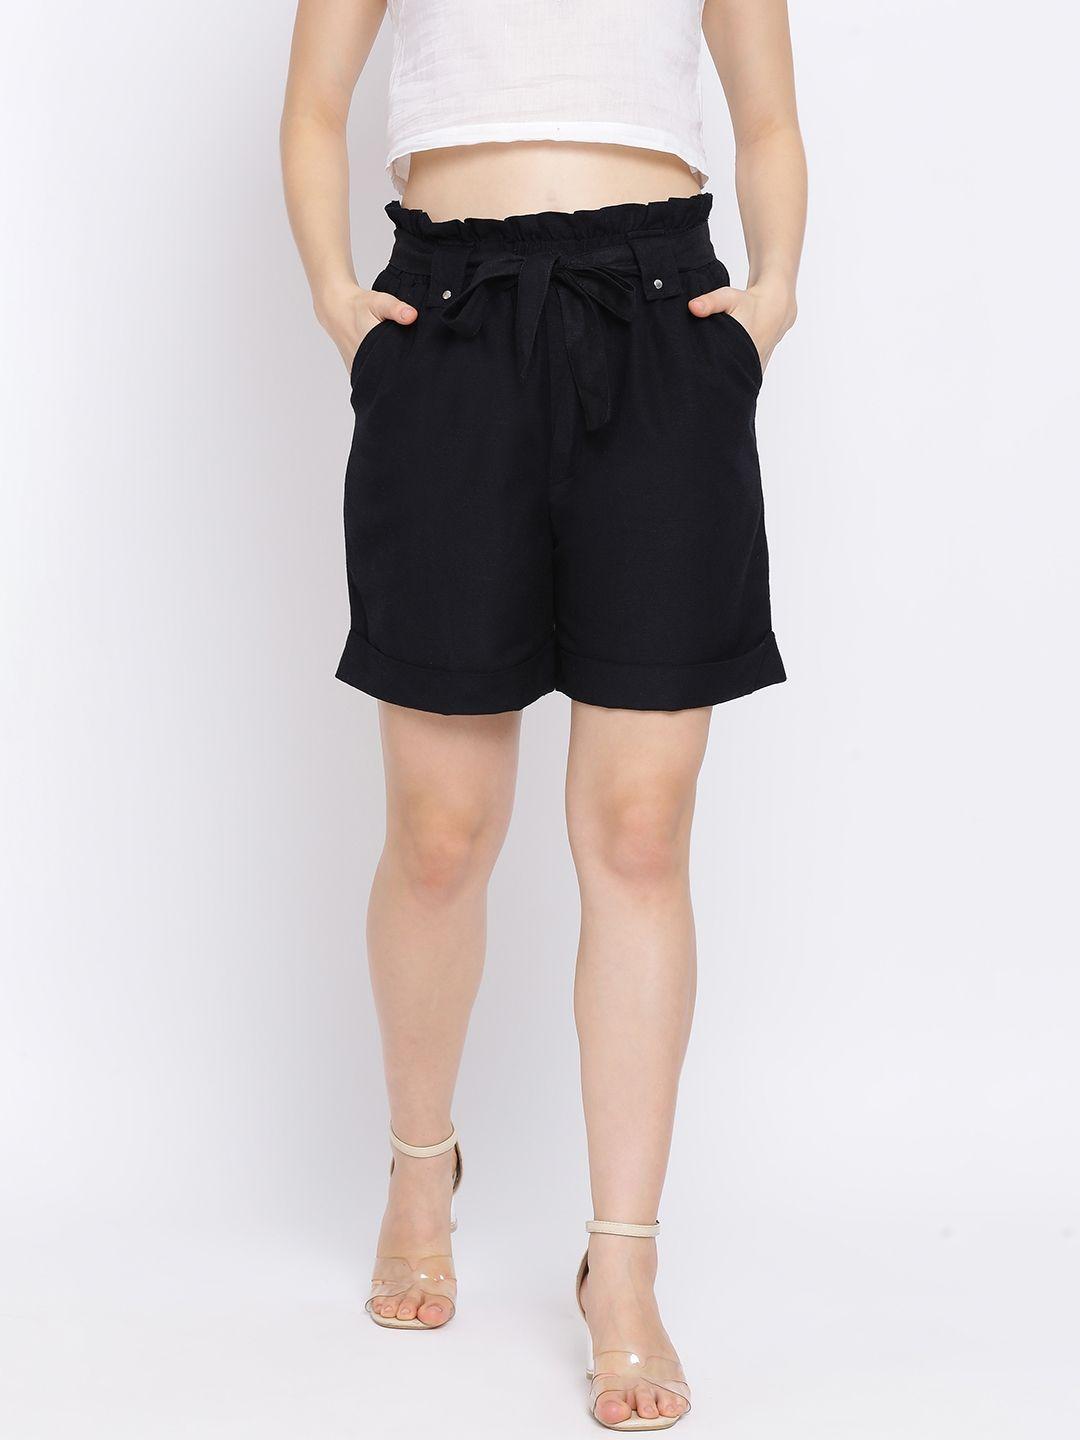 oxolloxo-women-black-solid-regular-fit-regular-shorts